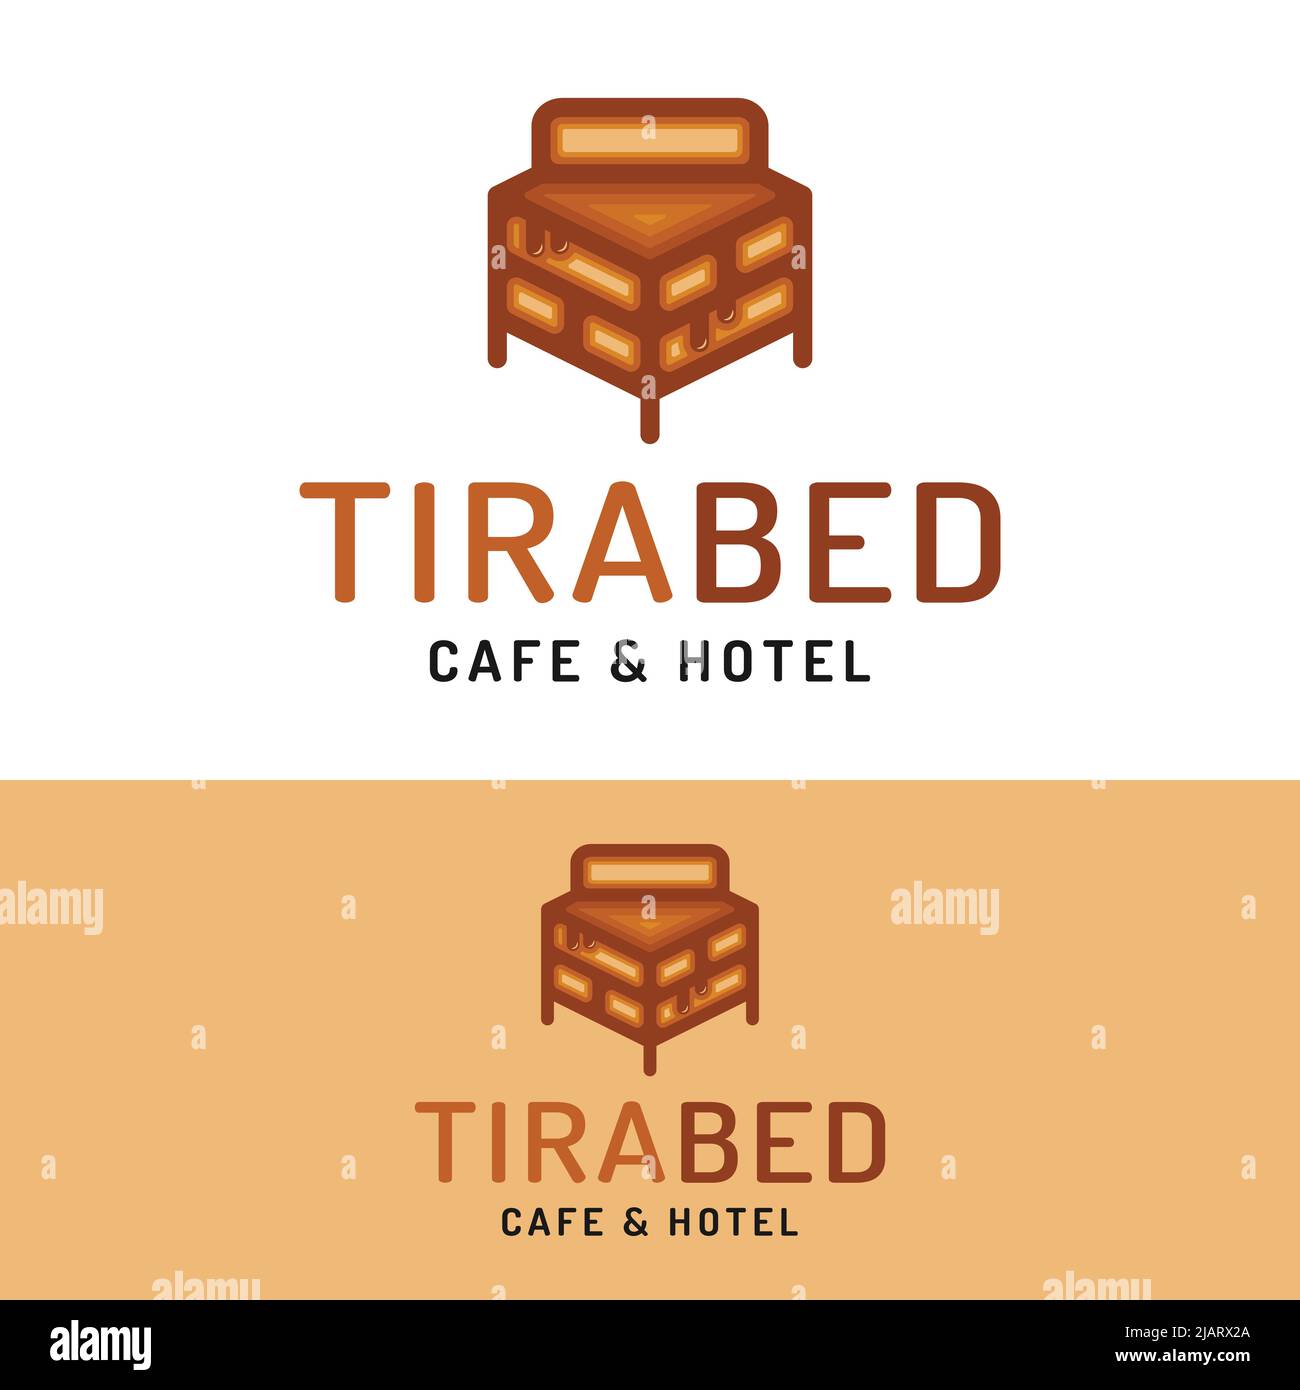 Tiramisu Chocolate Cake Bed Cafe Hotel Logo Design Template. Suitable for Lodging Hotel Inn Cafe Bakery Cake House Shop Business Brand Company Logo De Stock Vector